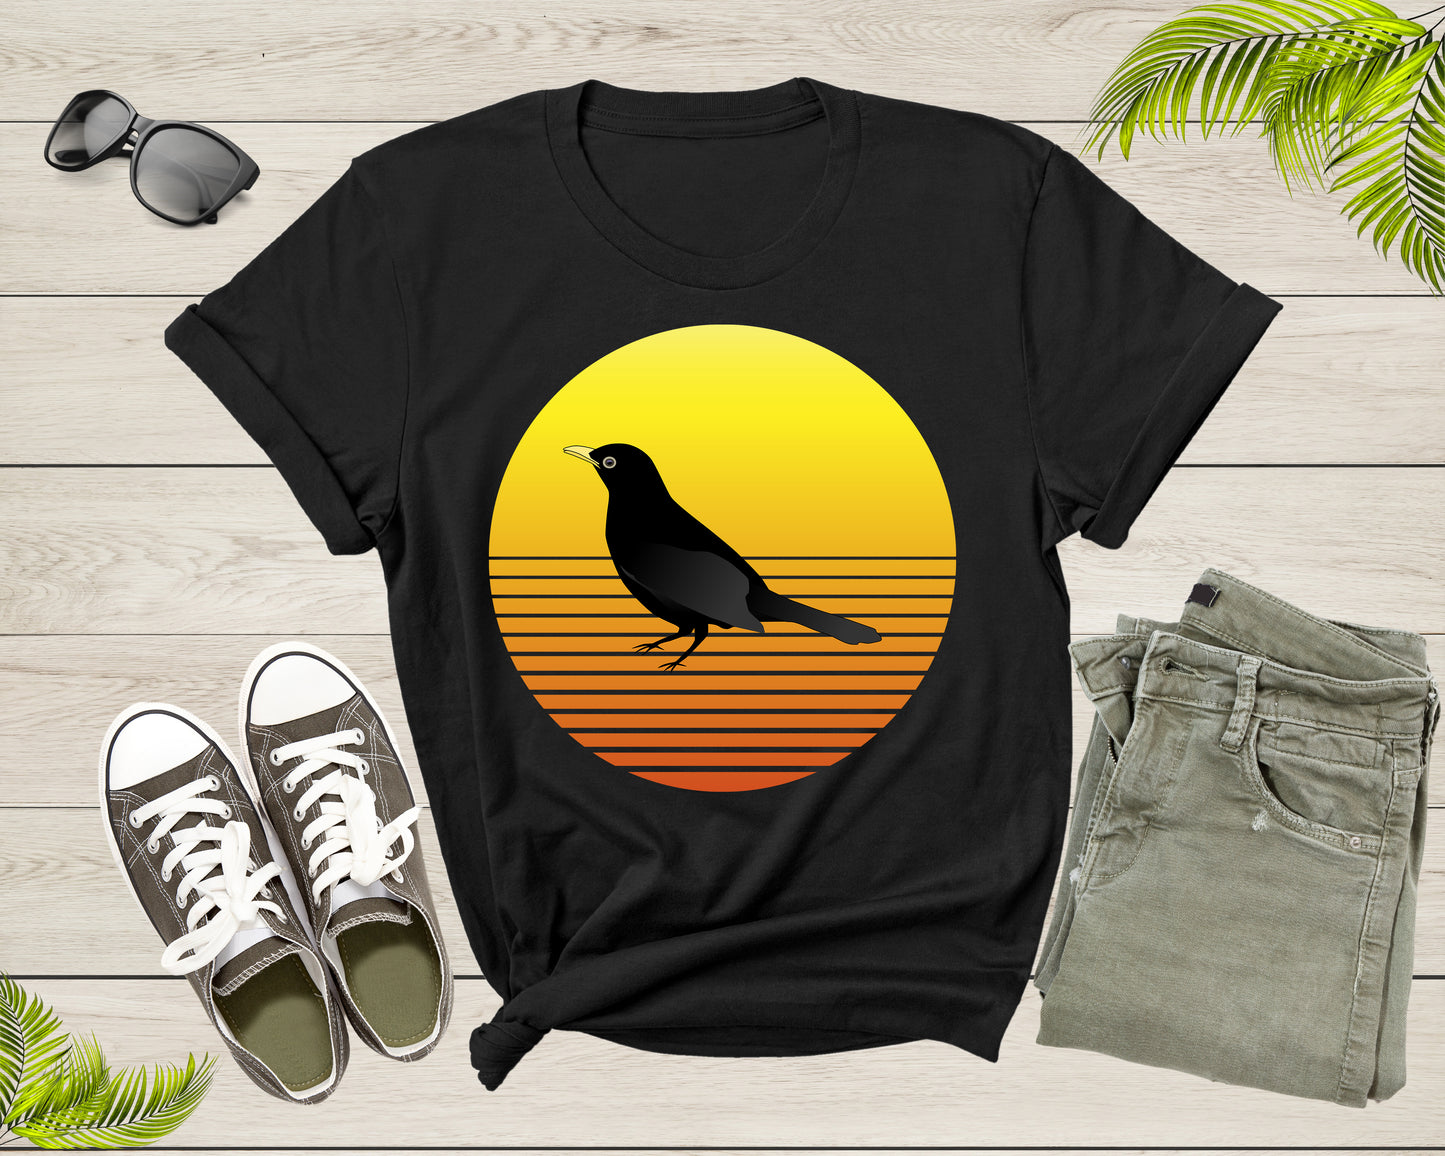 Black Crow Bird Silhouette At Sunset Wildlife Nature Animal T-shirt Crow Lover Gift Shirt For Men Women Kids Crow Themed Graphic Tshirt